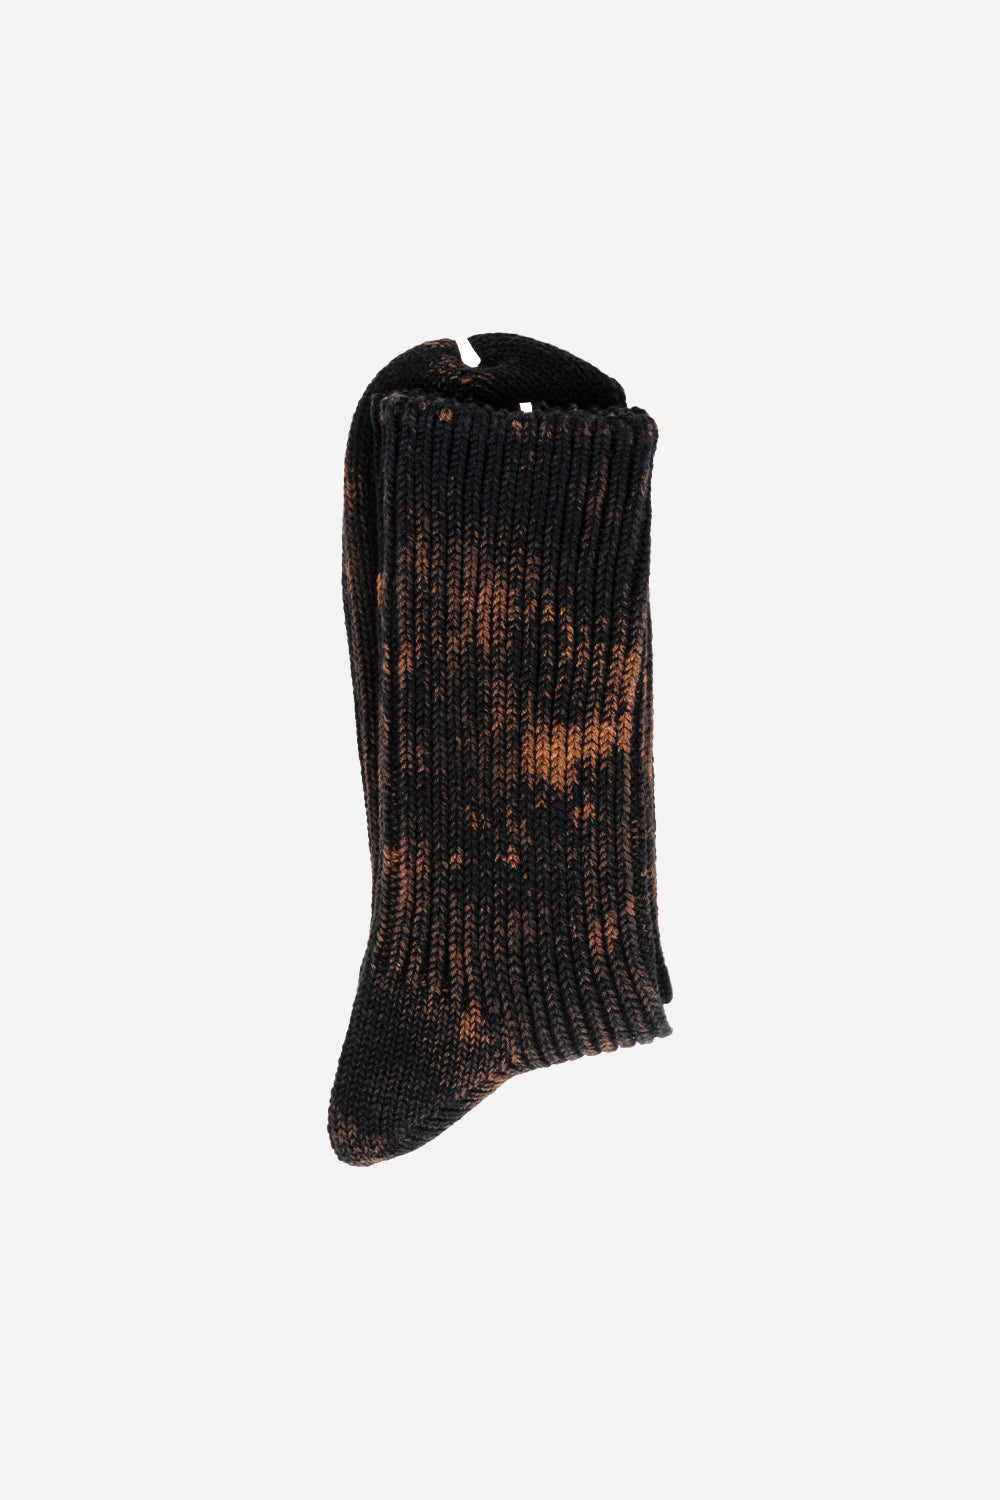 Rostersox-BA-black-socks